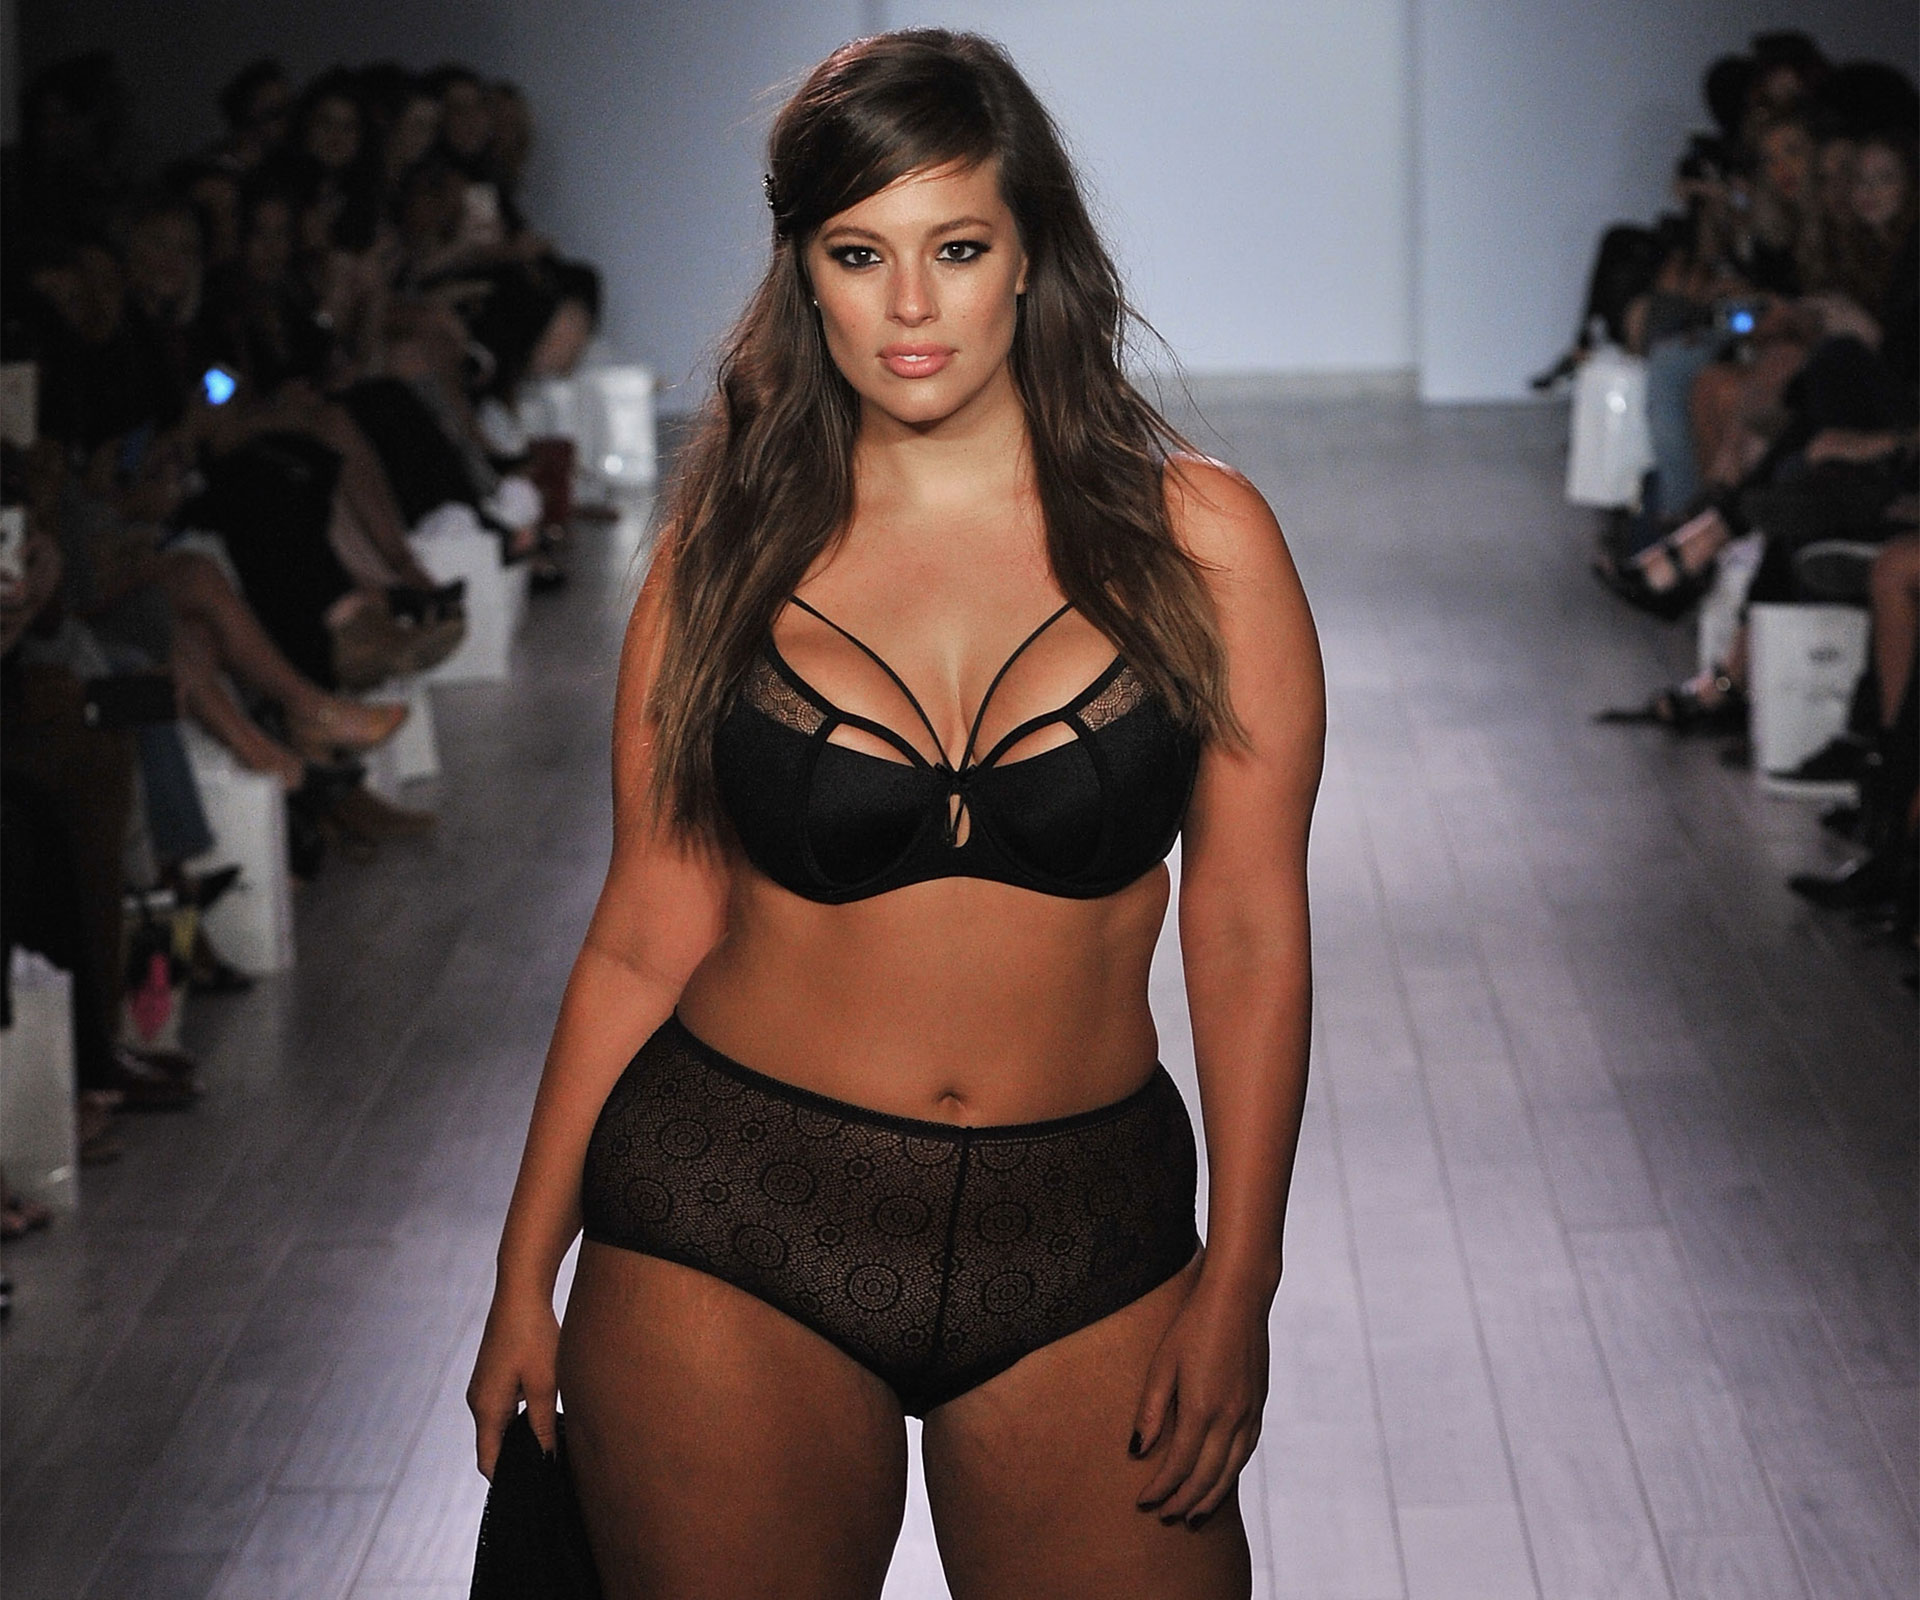 Size 16 model rocks runway at New York Fashion Week